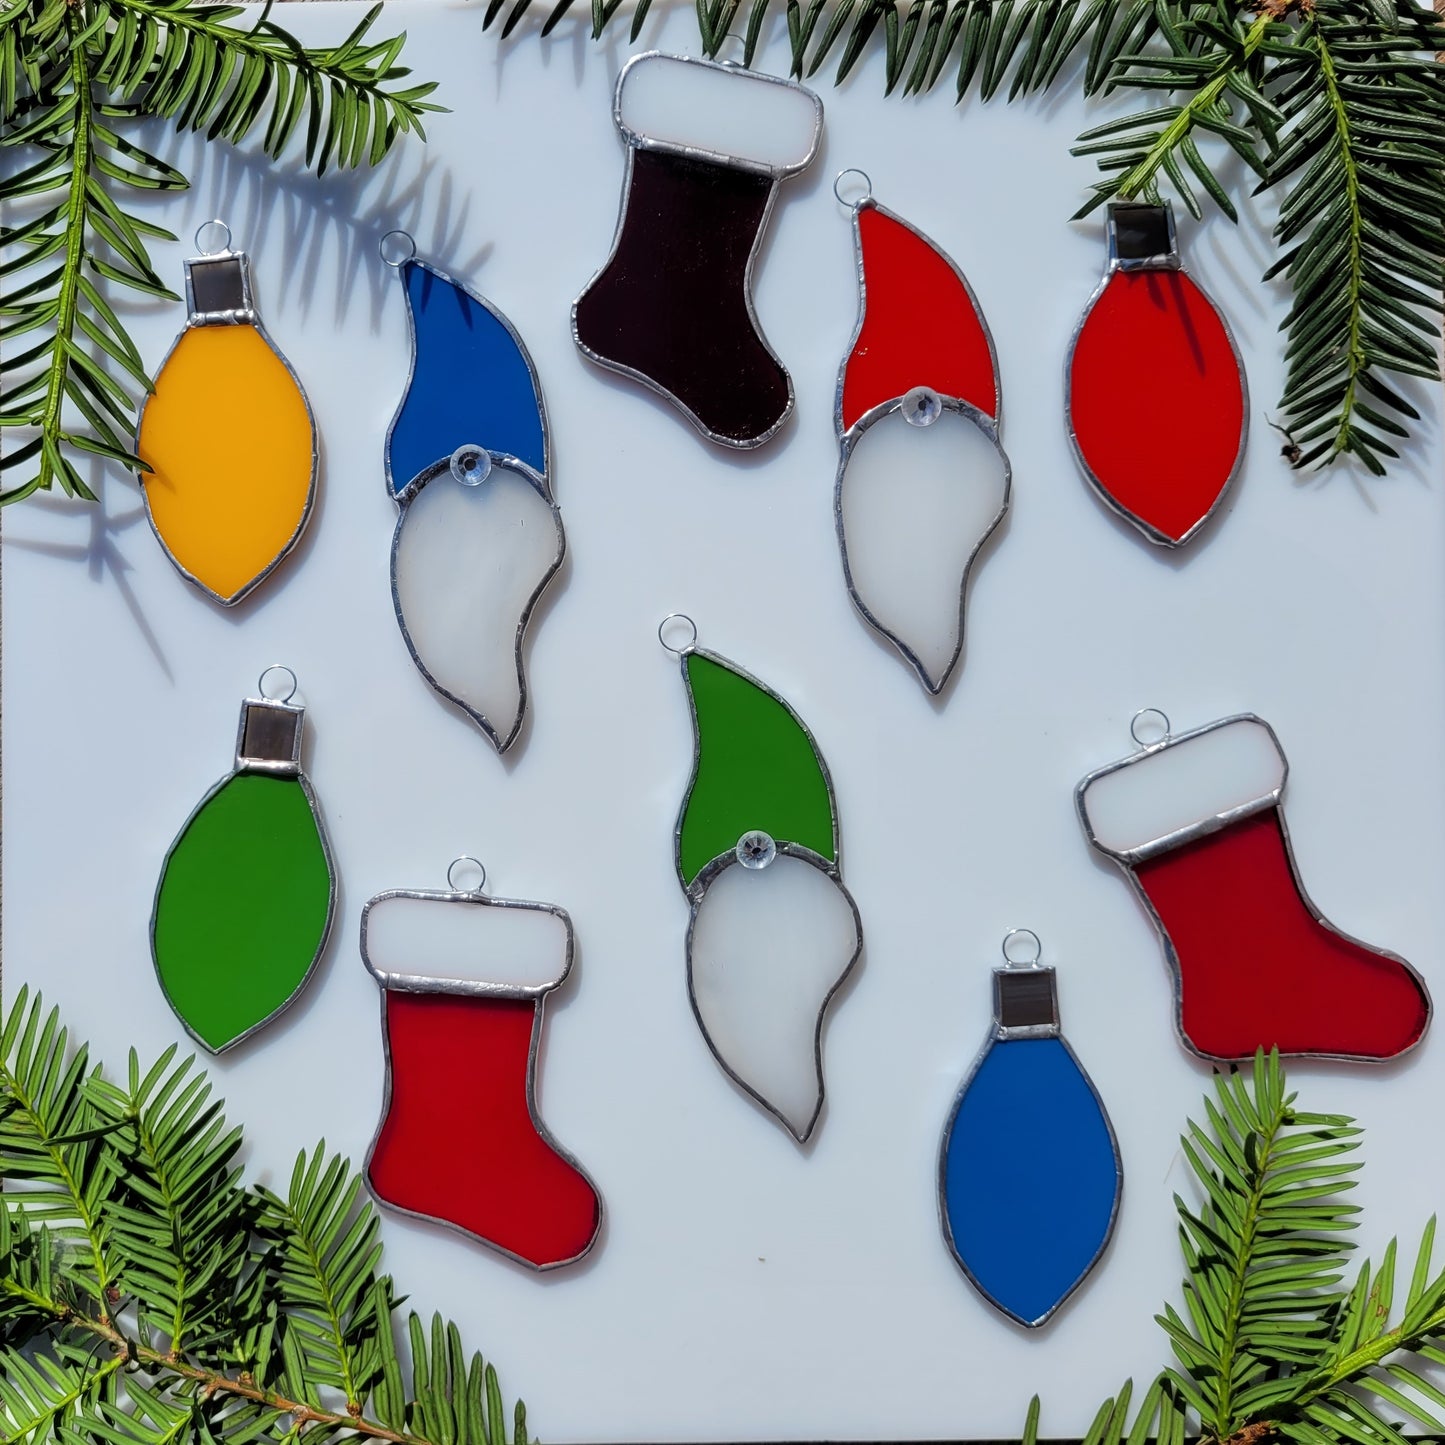 Christmas Ornaments - Festive edition - 3 Hr workshop, make 3 Ornaments - Gnome/Elf, Tree Light & Stocking